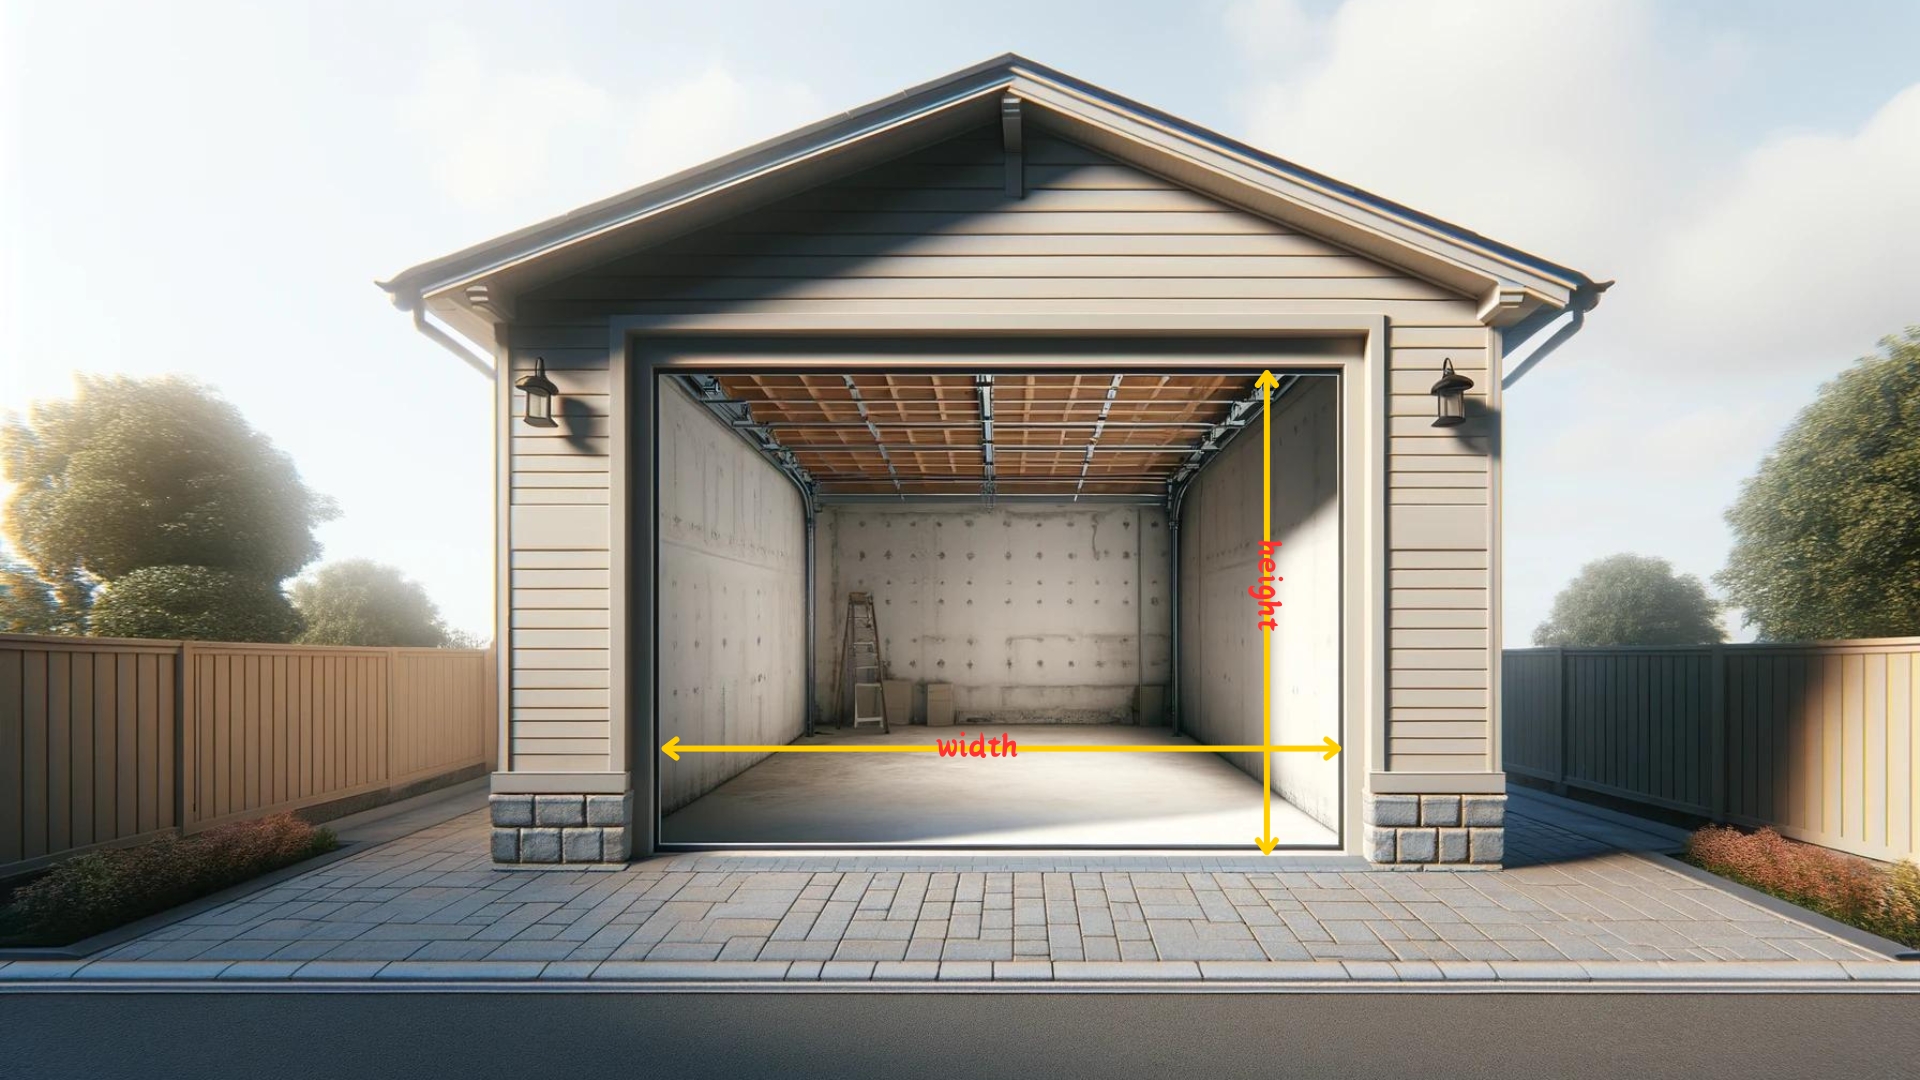 A standard sized garage door